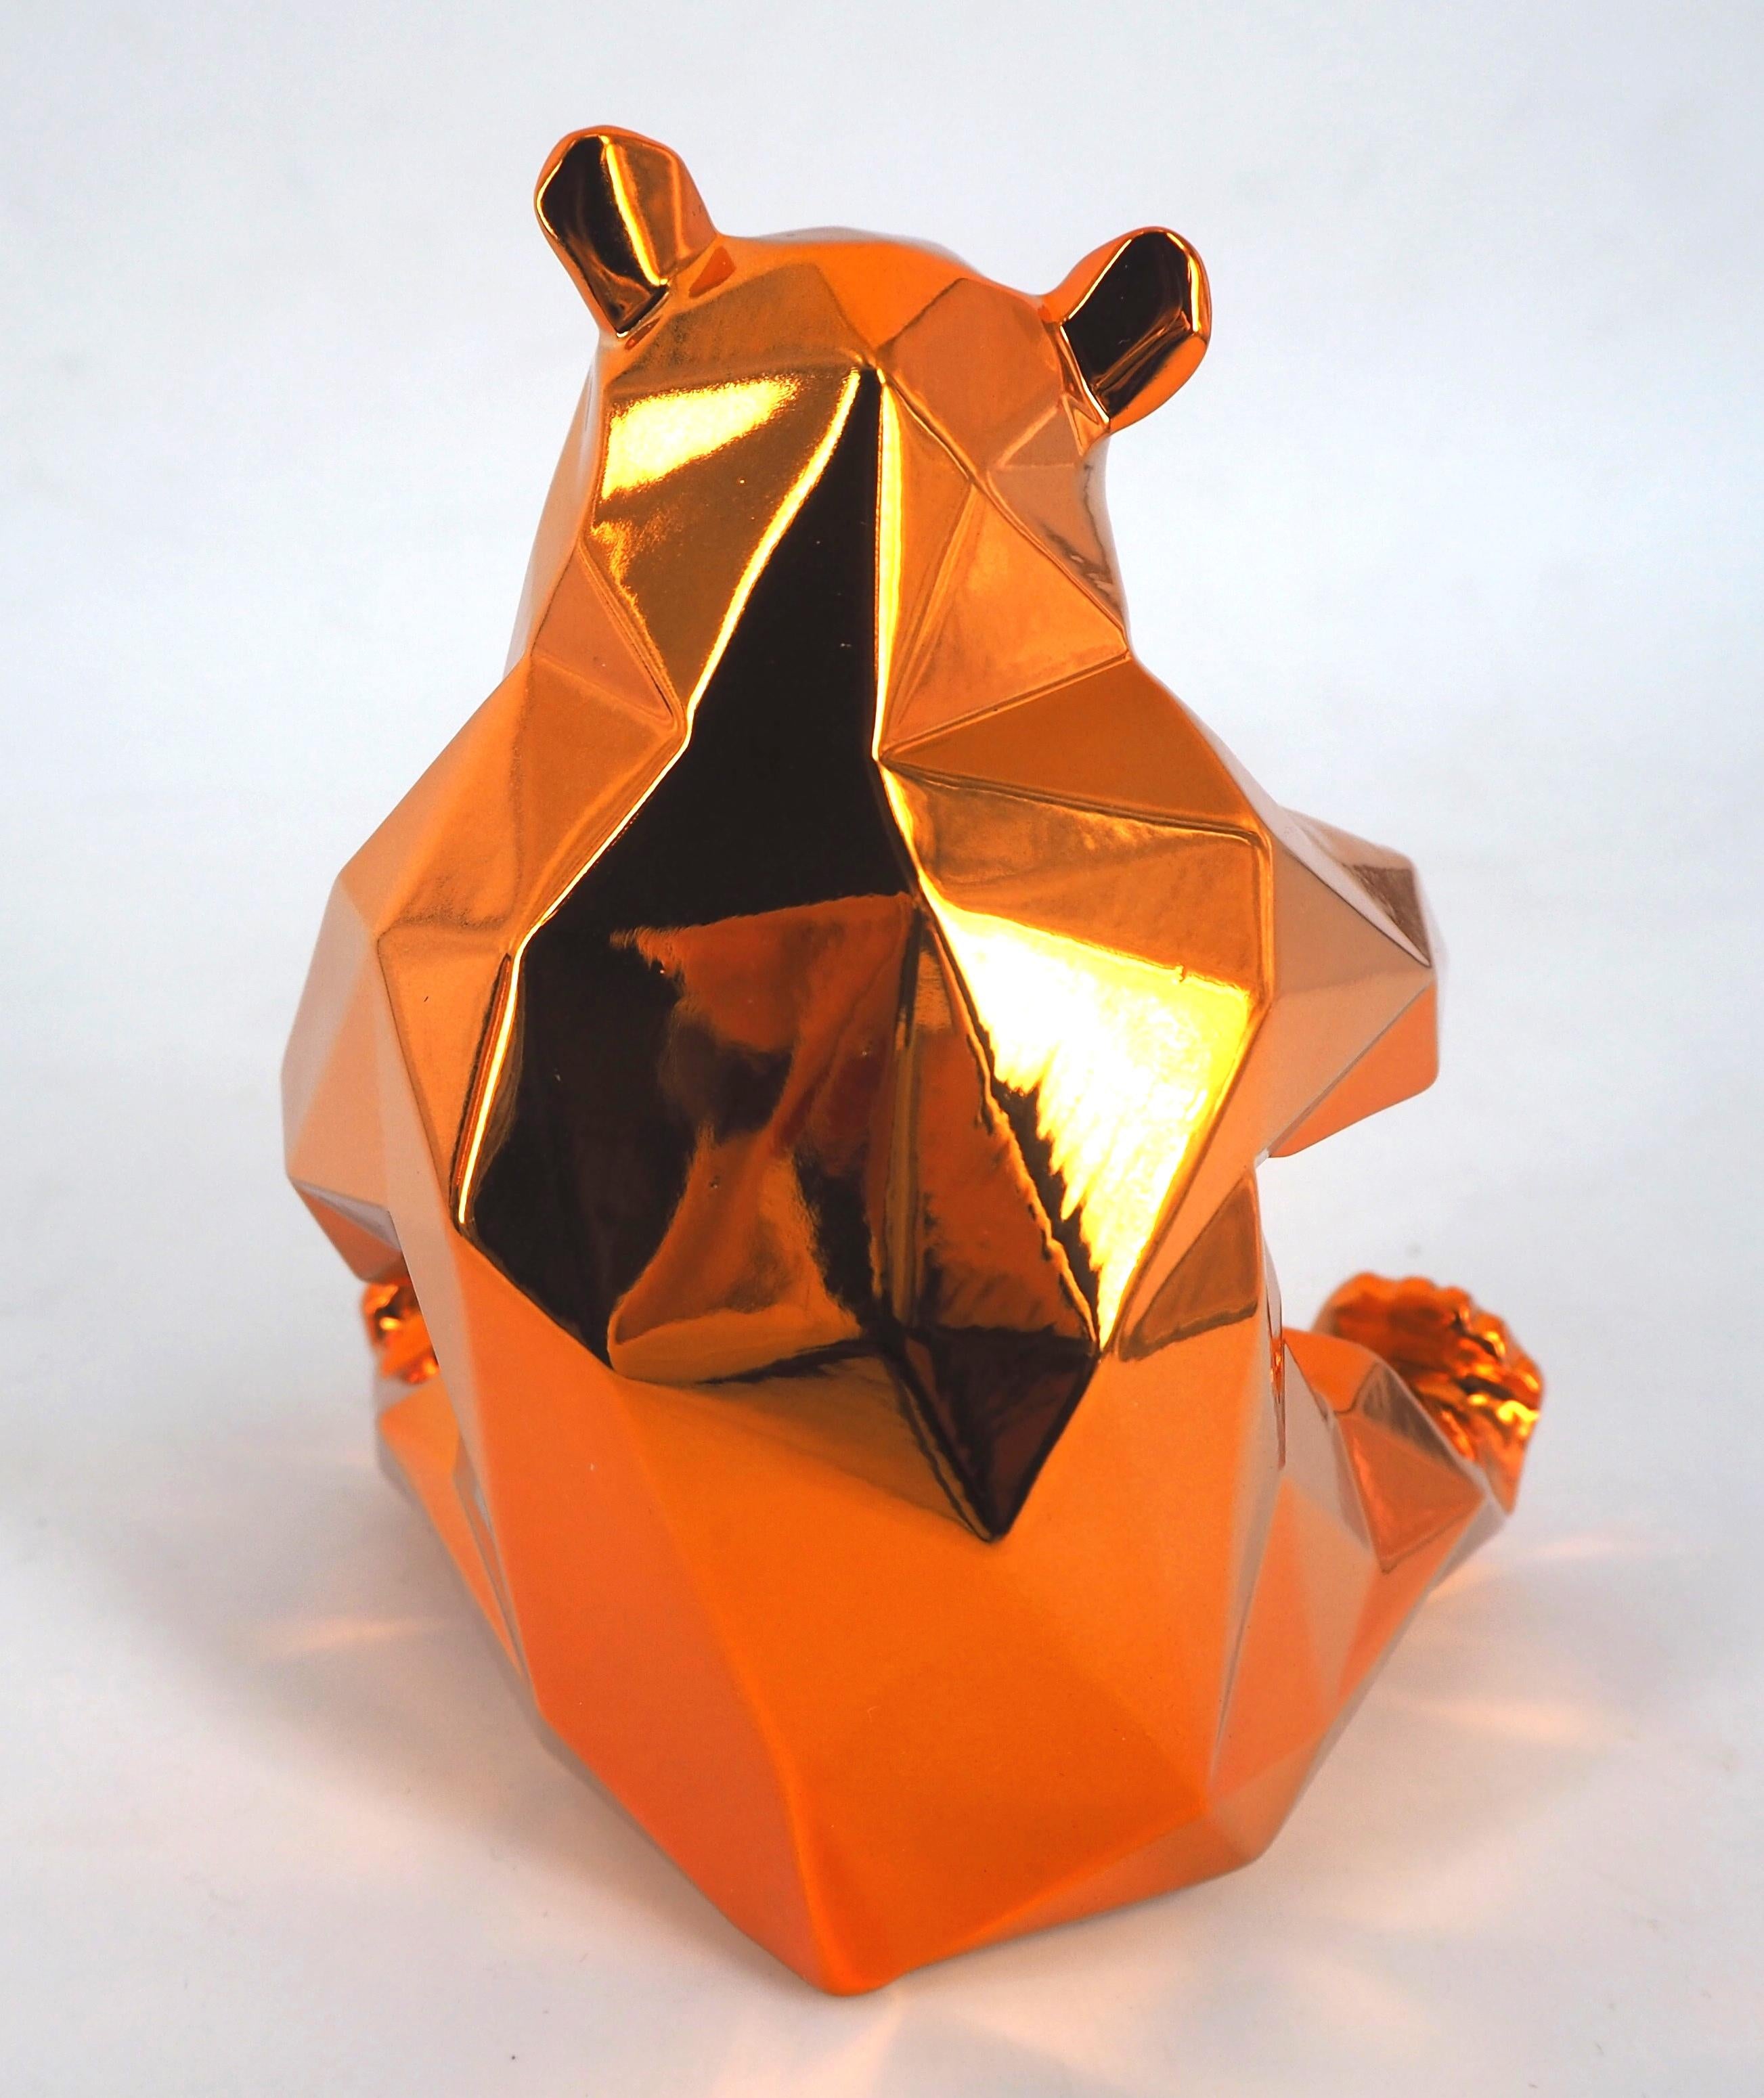 Panda Spirit (Orange Edition) - Sculpture in original box with artist coa - Gray Figurative Sculpture by Richard Orlinski